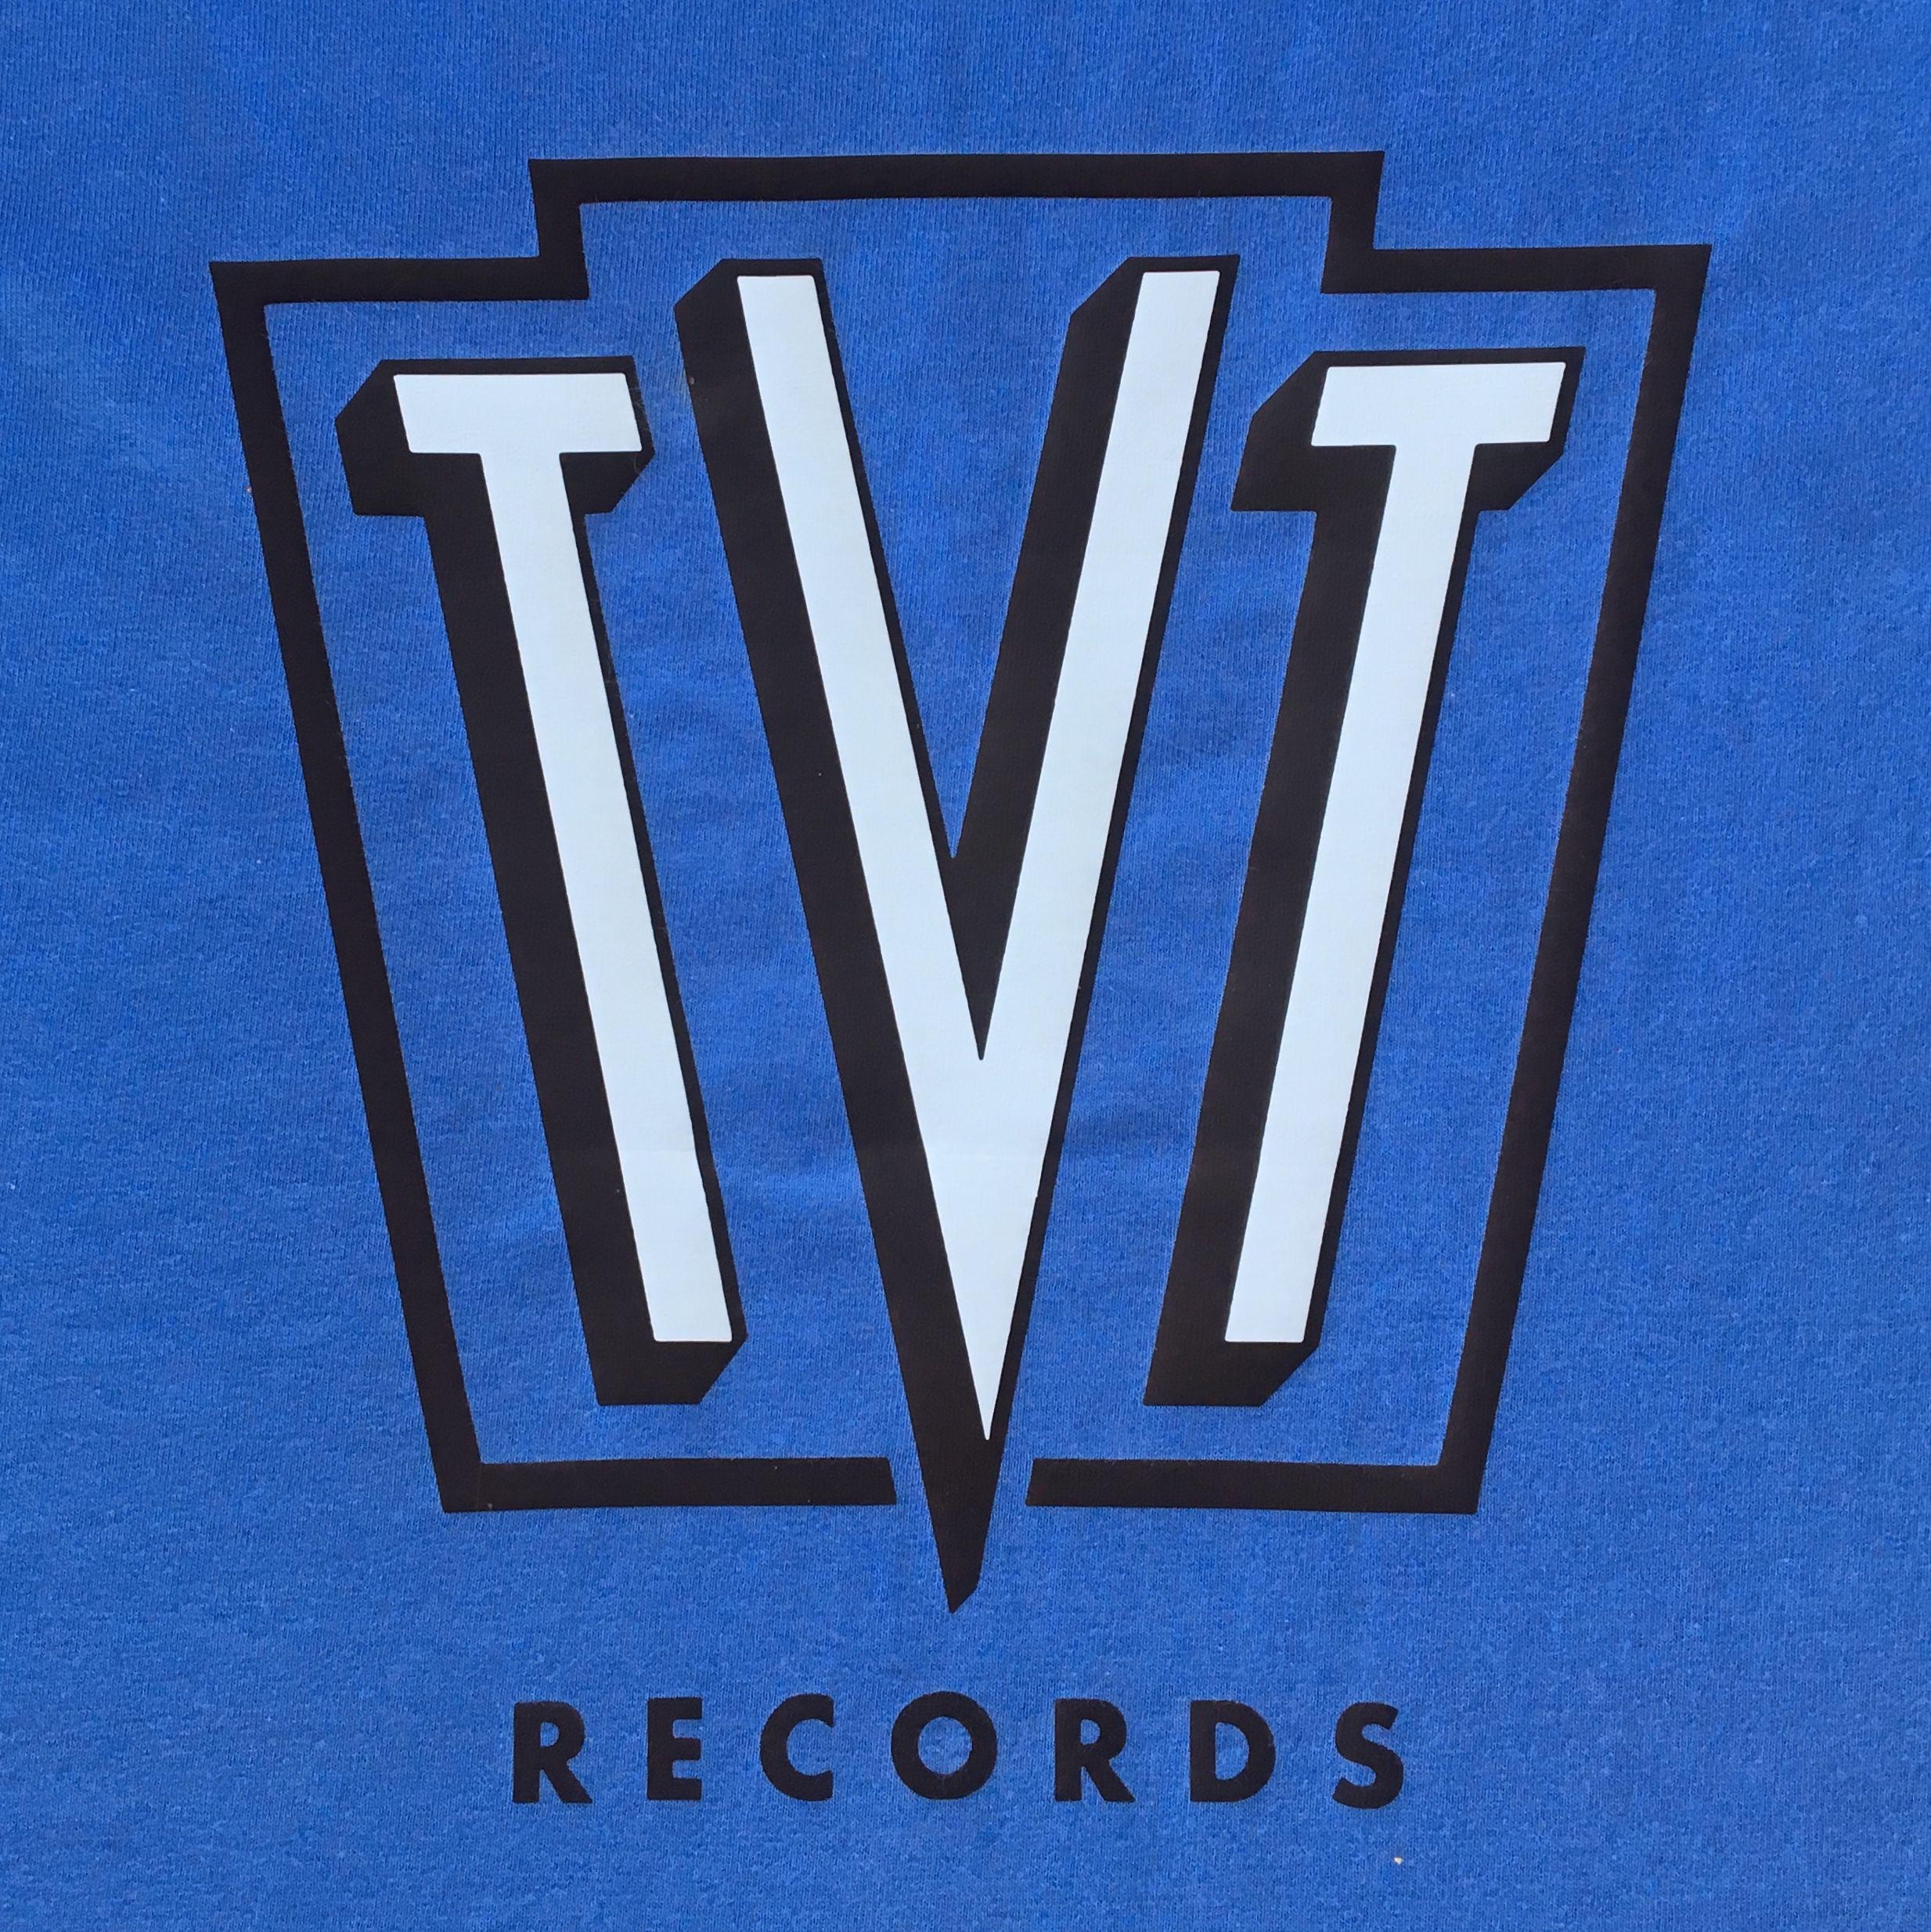 TVT Logo - TVT Records | DIY shirts in 2019 | Company logo, Diy shirt, Heat ...